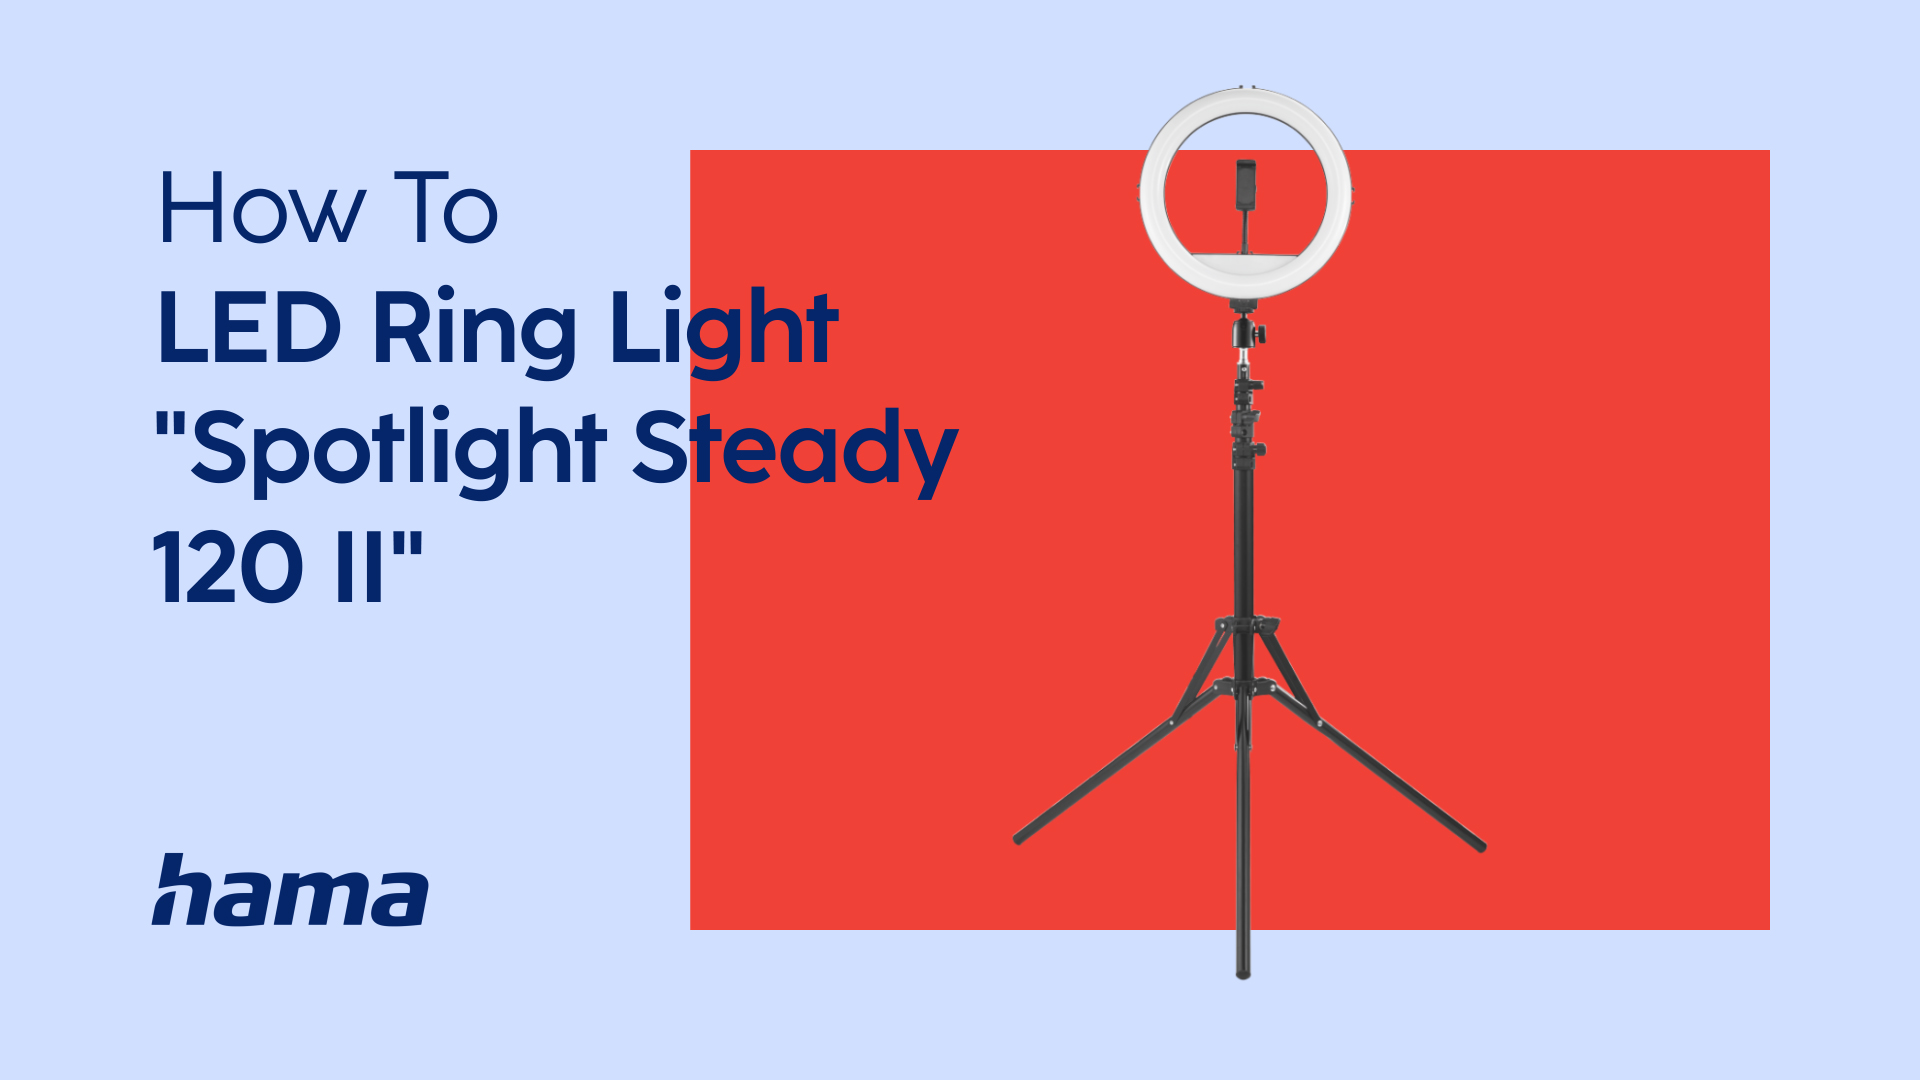 Hama LED Ring Light "SpotLight Steady 120 II"